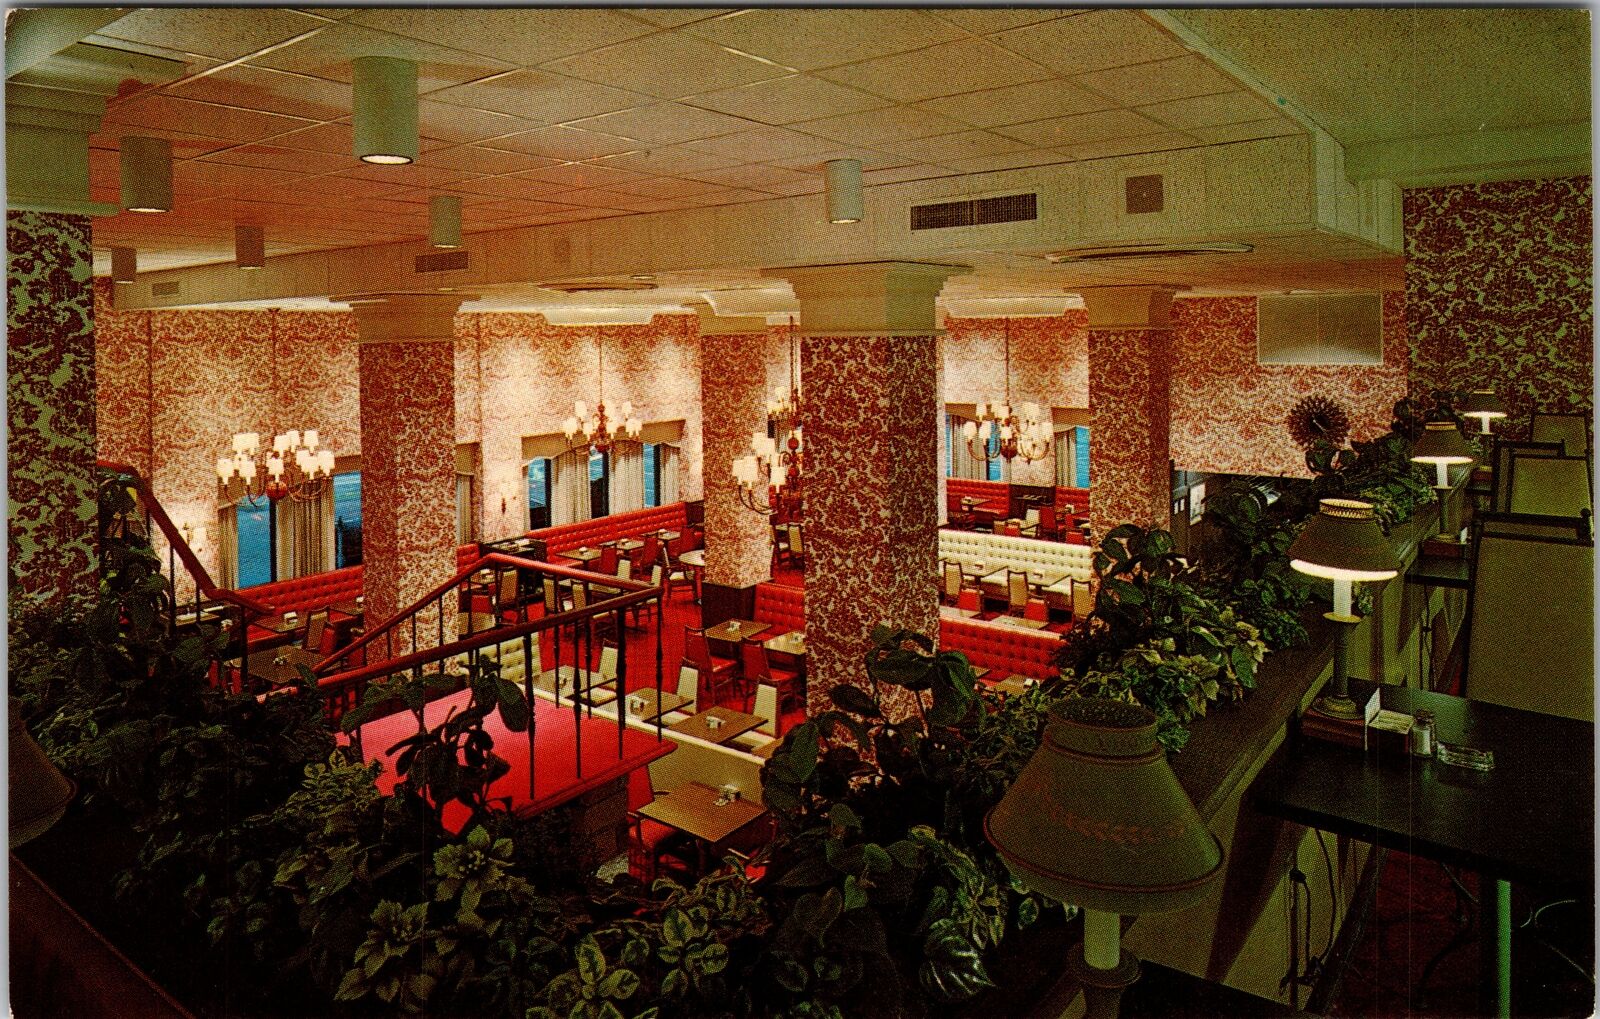 Mansfield OH-Ohio, Stewart's Cafeteria, Interior, Vintage Postcard